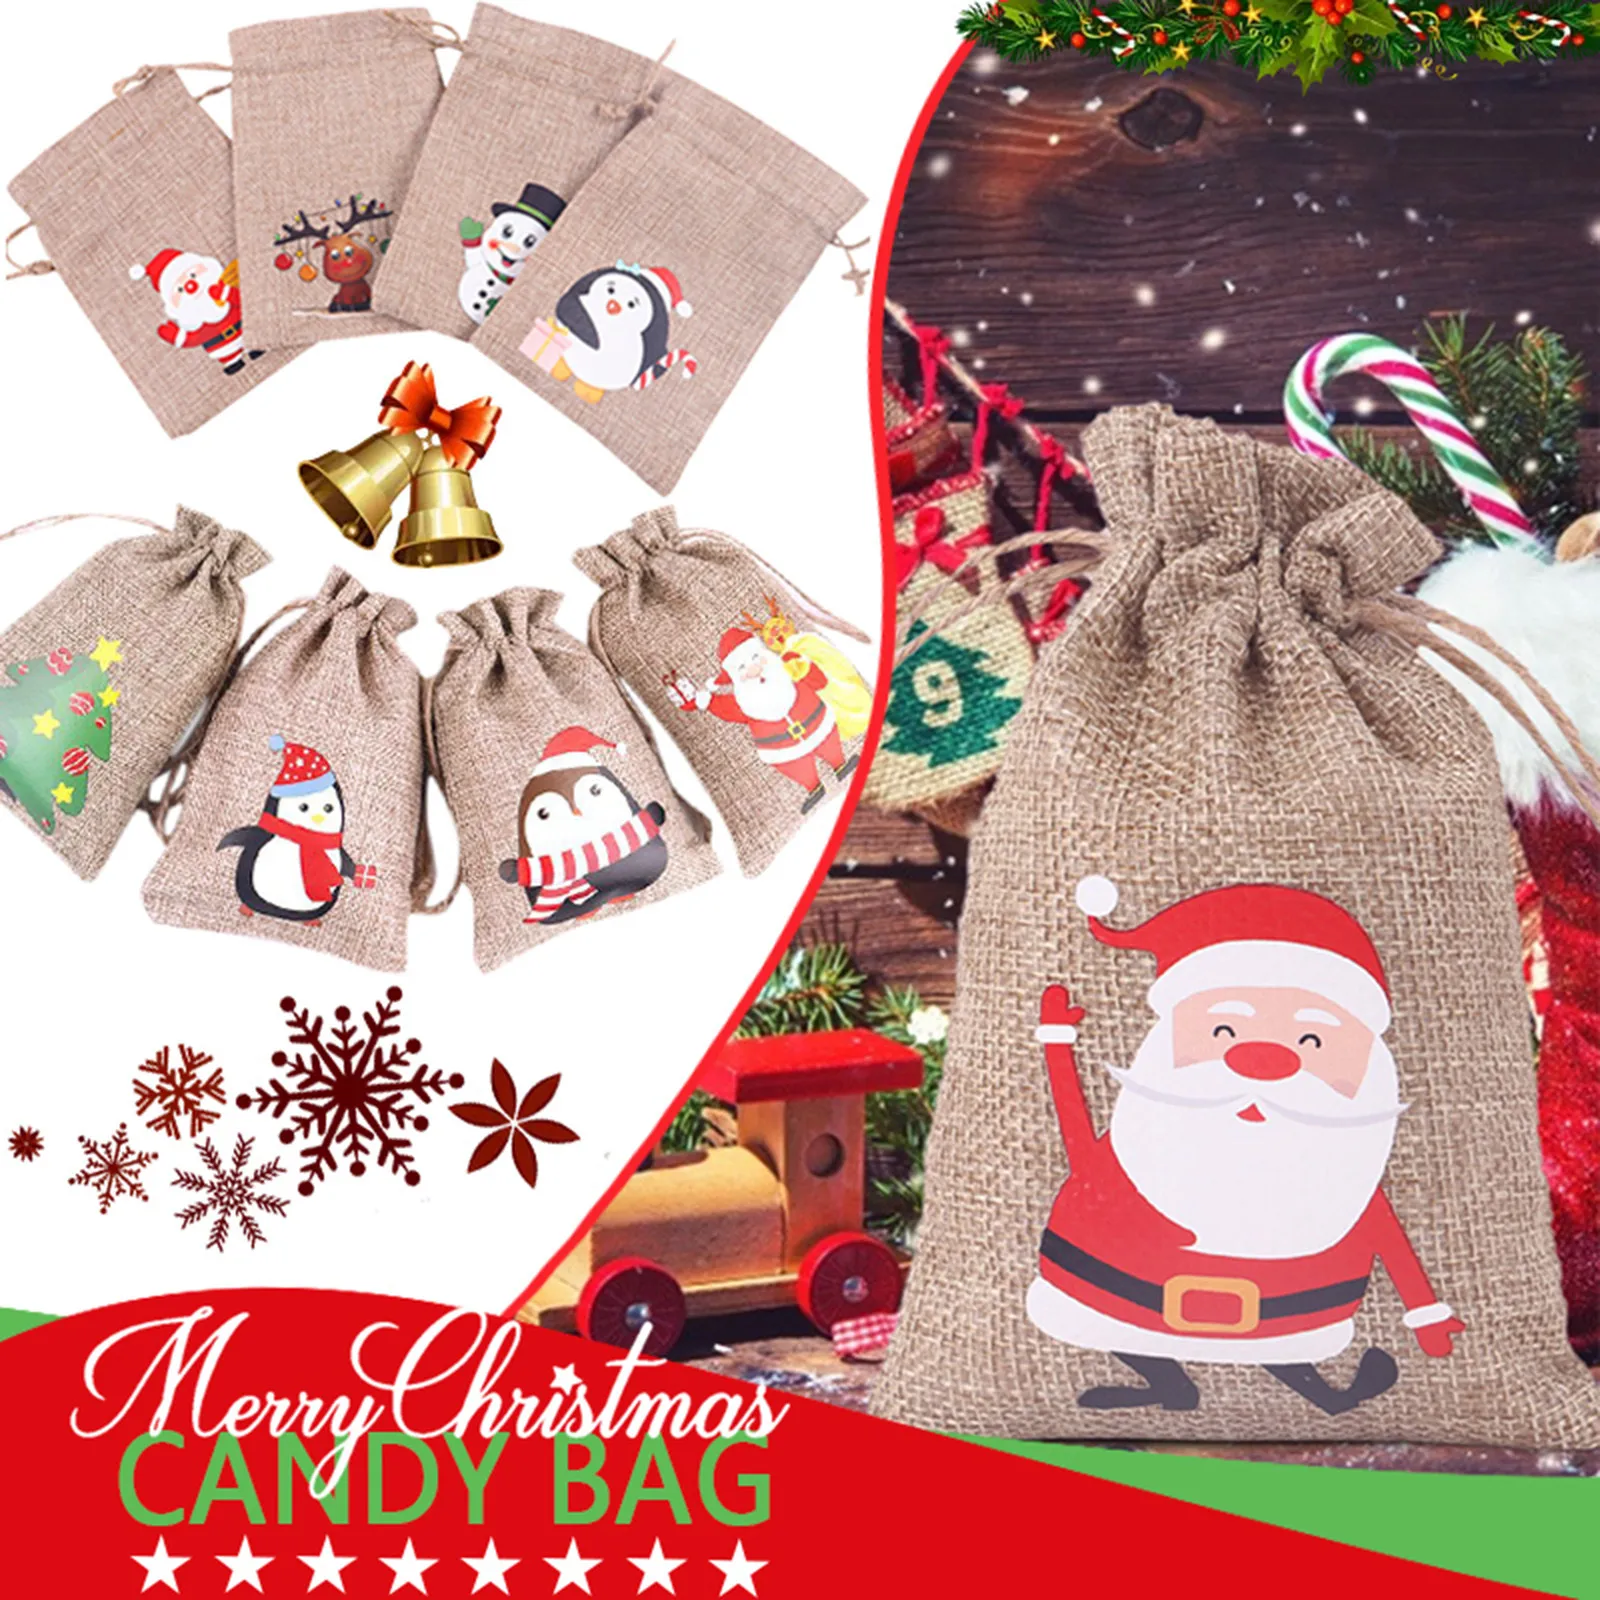 2 x Santa Claus Bag Christmas bags Gift bags Christmas packaging Felt 